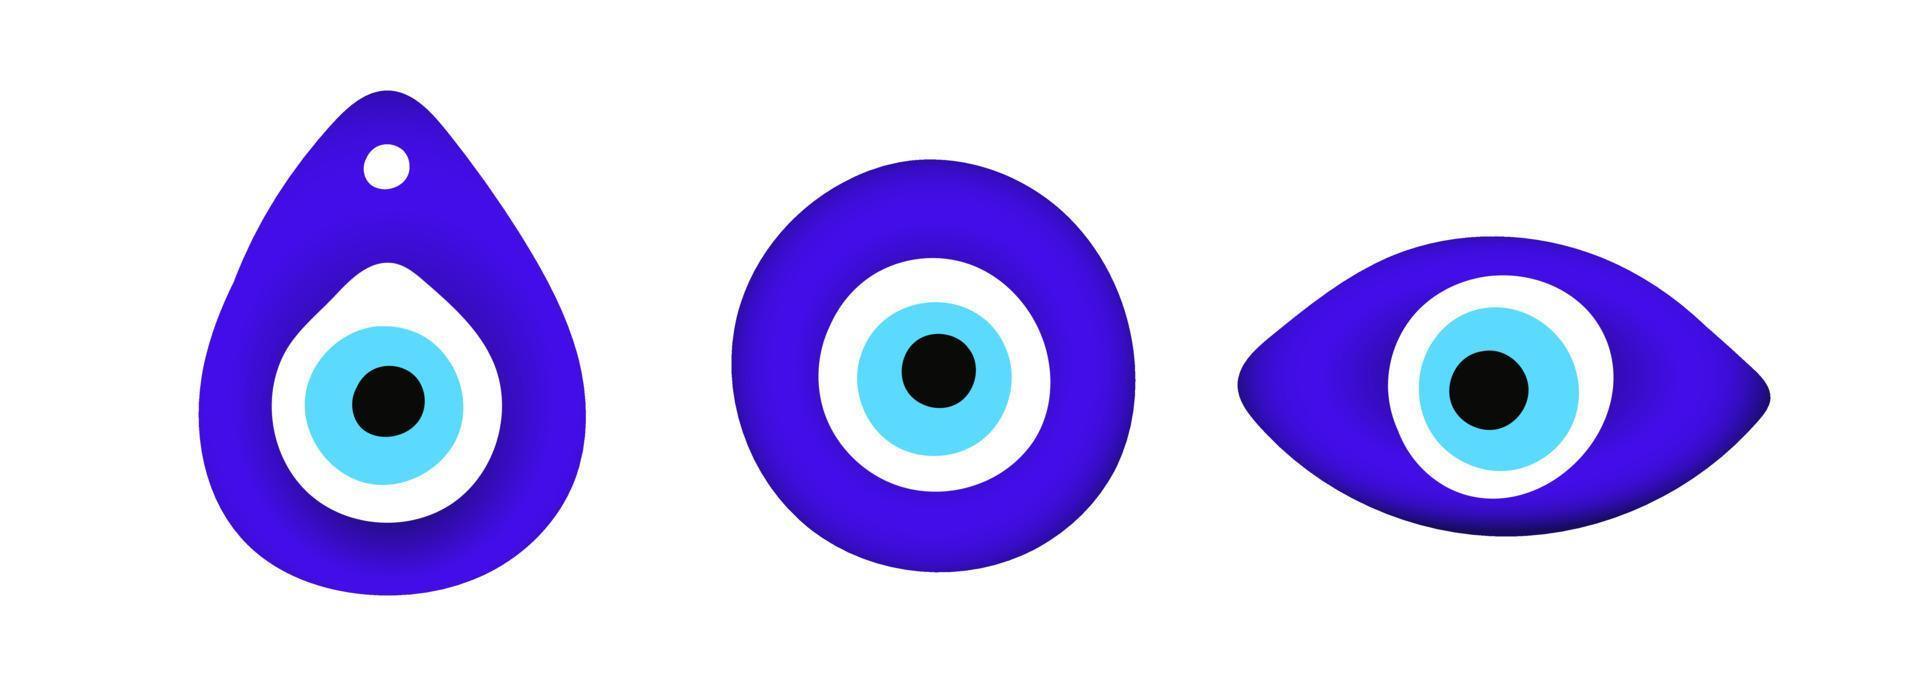 Blue oriental evil eye symbol amulet flat style design vector illustration isolated on white background.